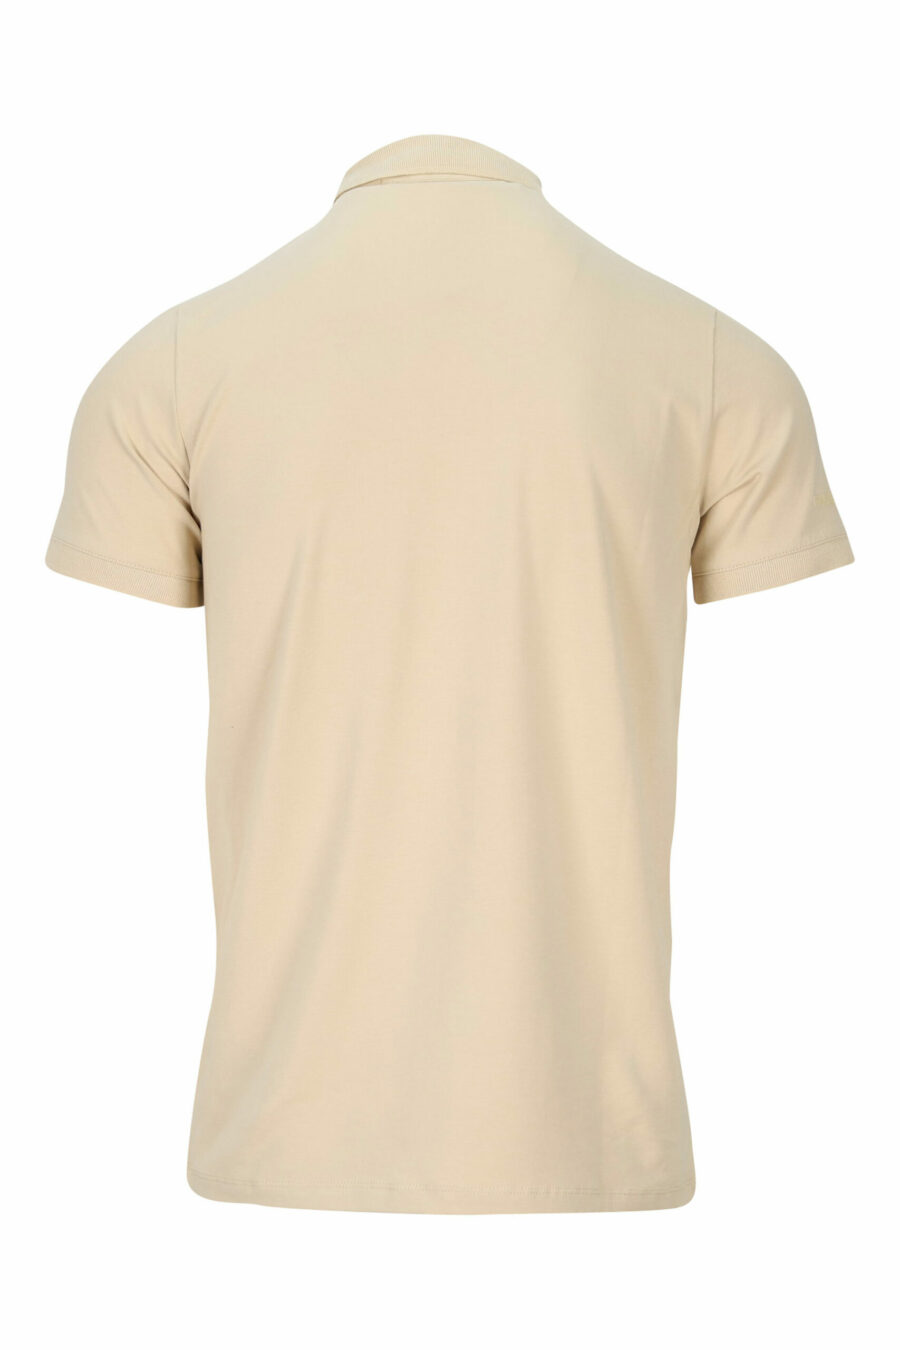 Beigefarbenes Poloshirt mit monochromem Mini-Logo - 4062226398558 1 skaliert